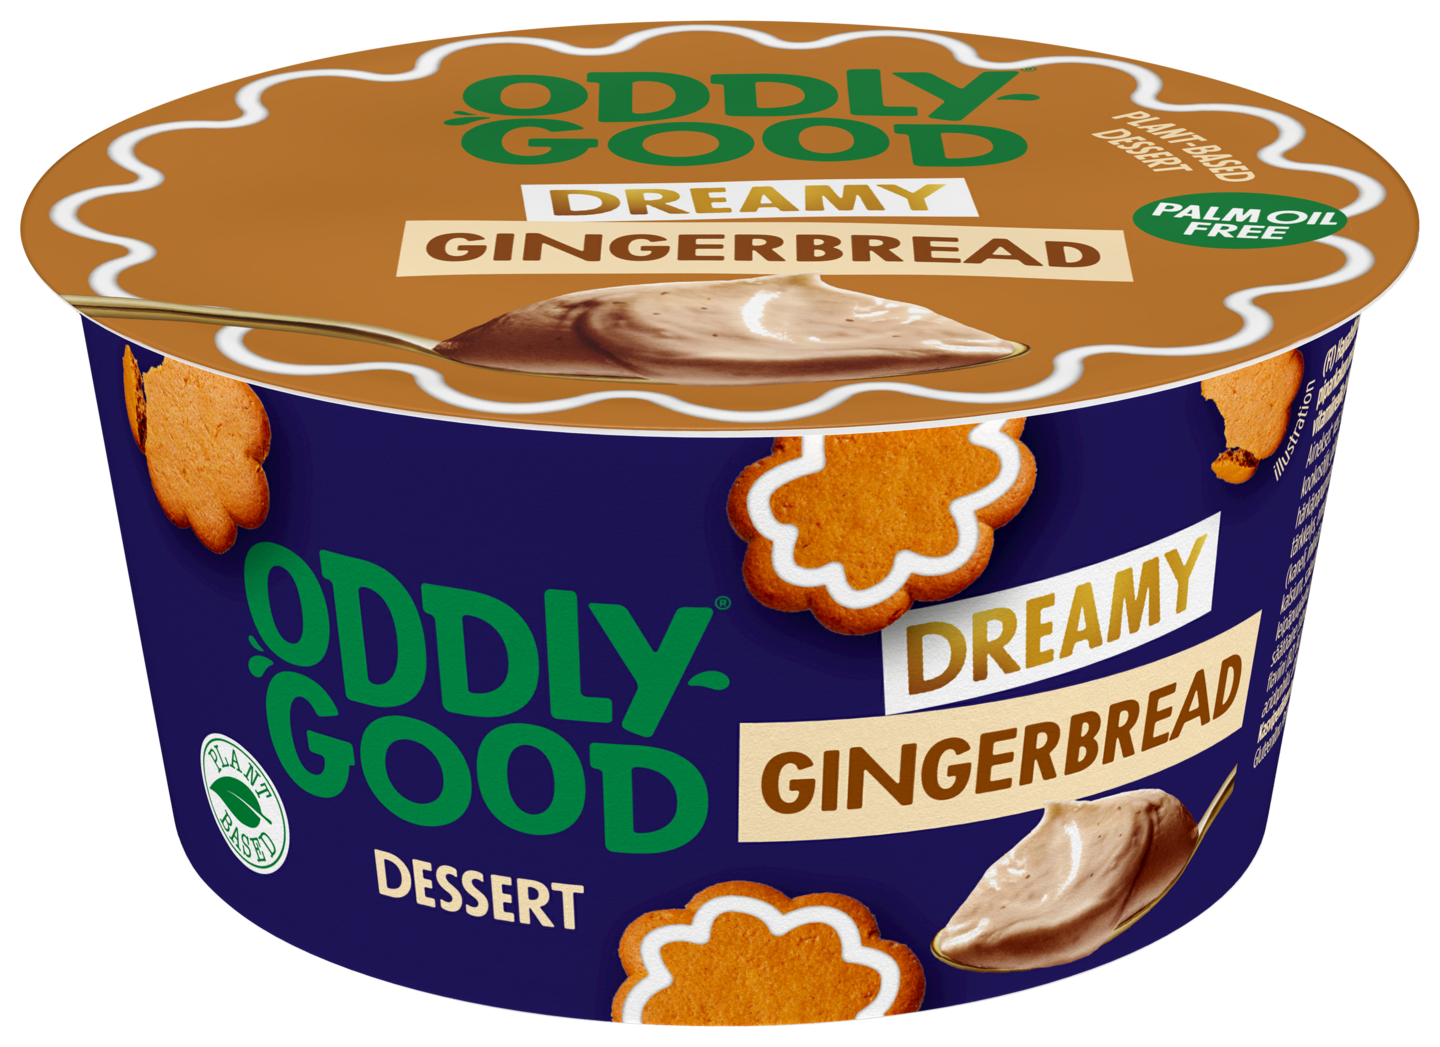 Oddlygood Dessert 130g dreamy gingerbread